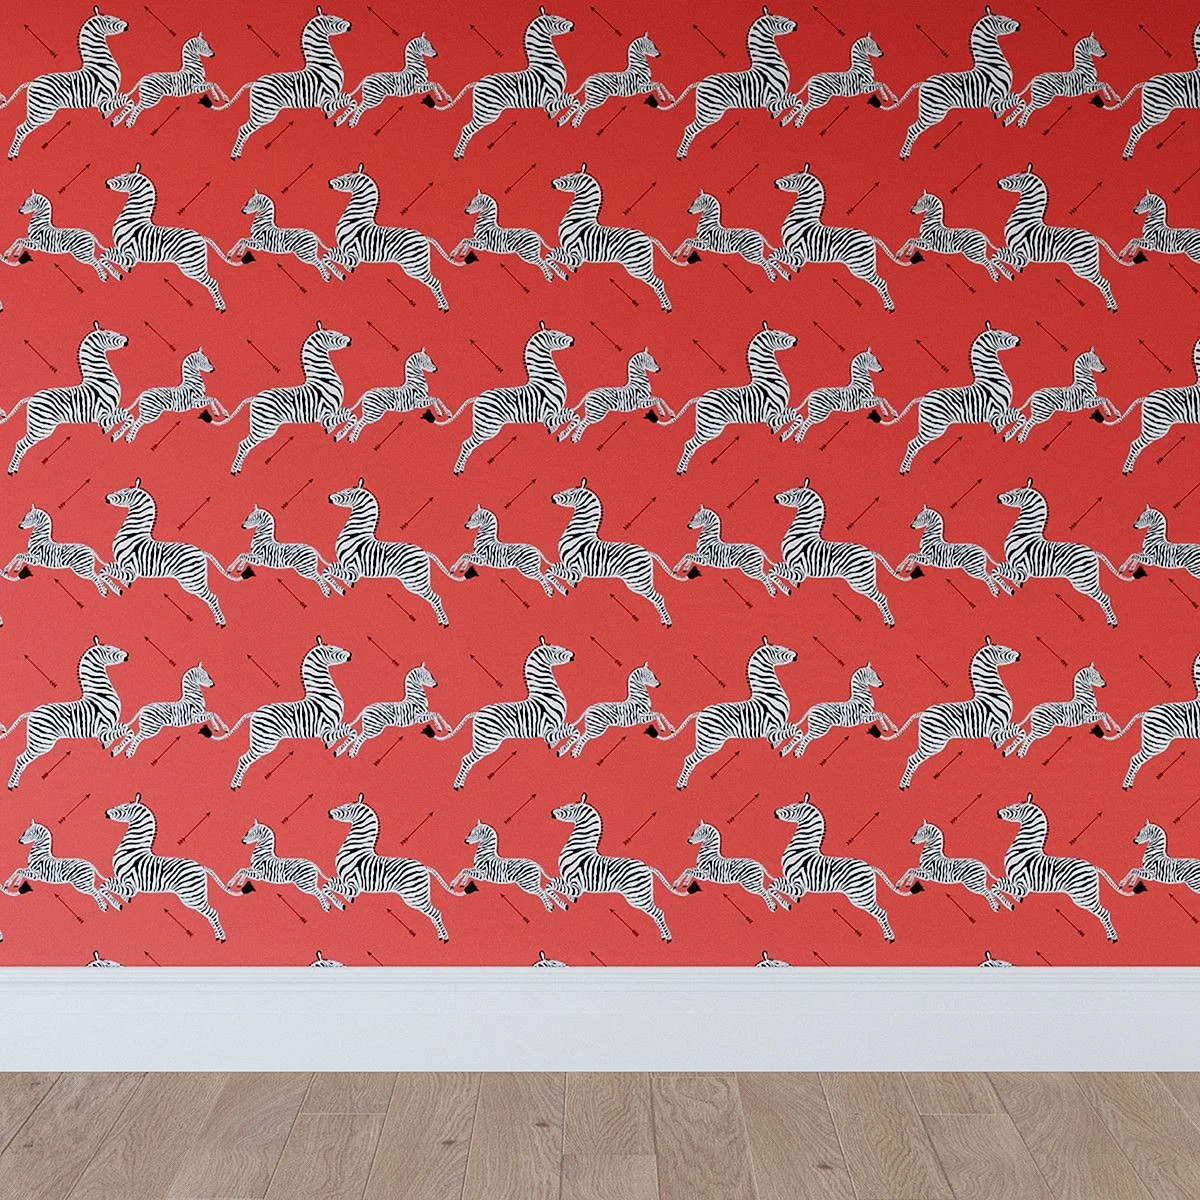 Scalamandre Zebras Wallpaper